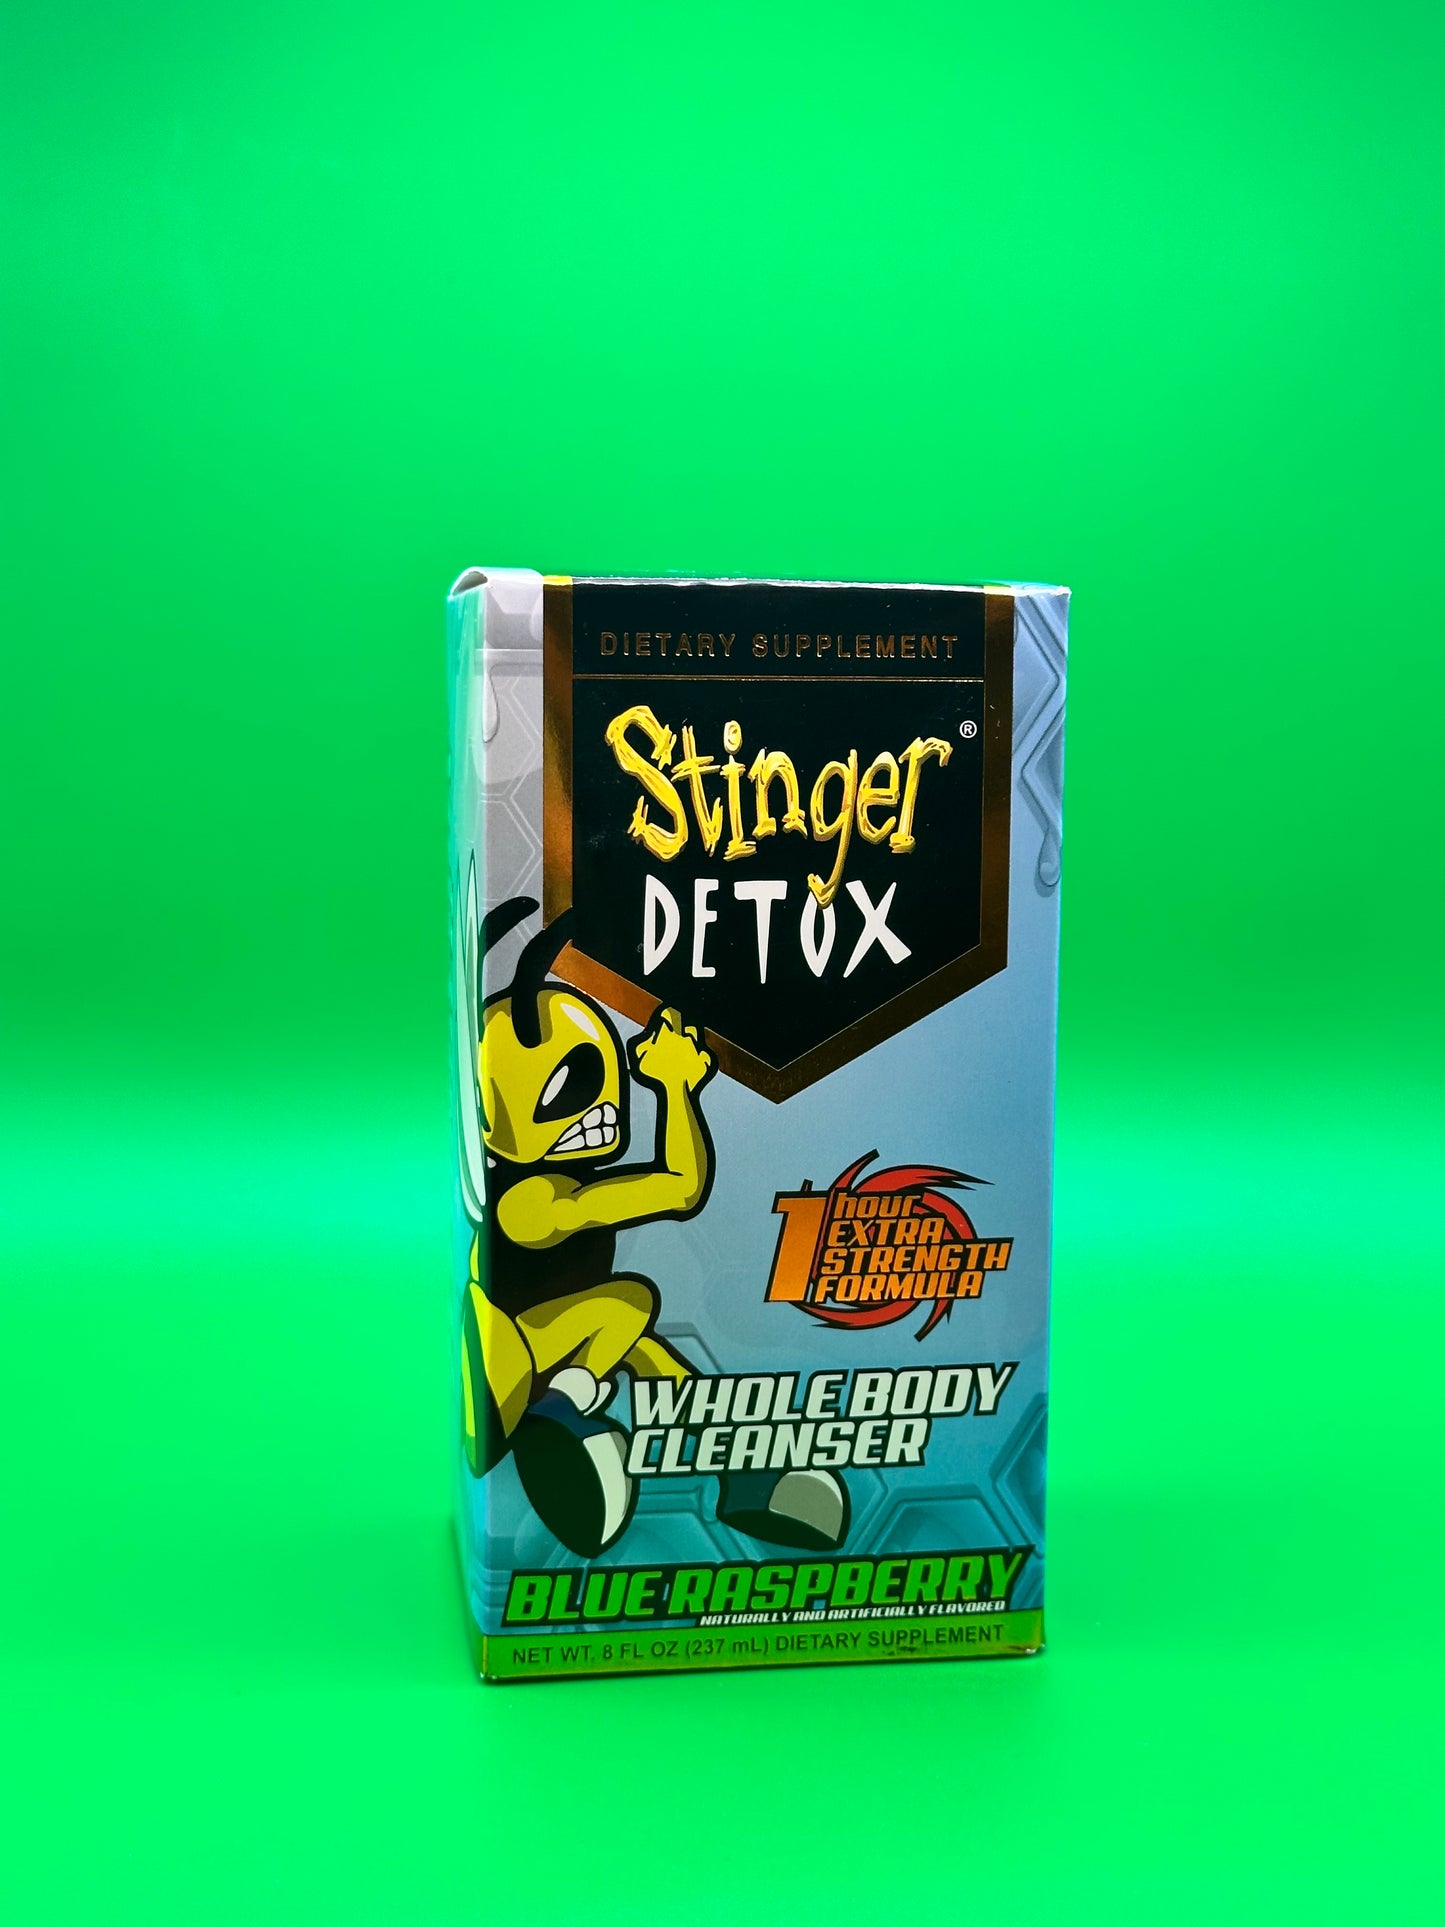 Stinger Detox | Whole Body Cleanser | 1 Hour Extra Strength Formula